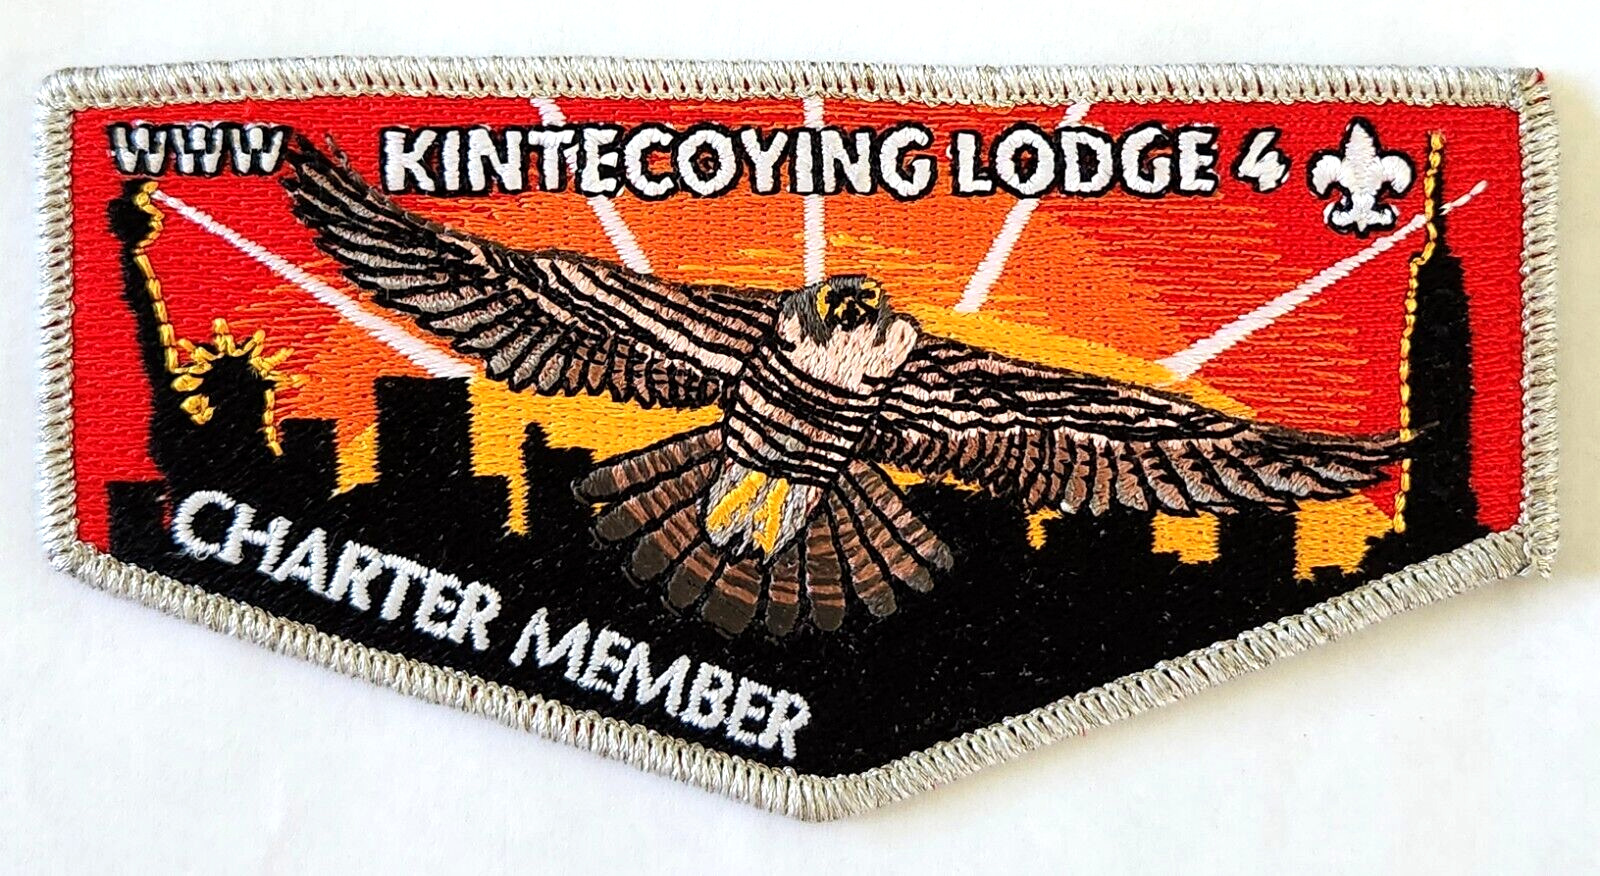 Lodge 4 Kintecoying S1 2013 Charter Member First Flap Pocket Flap  OA  BSA